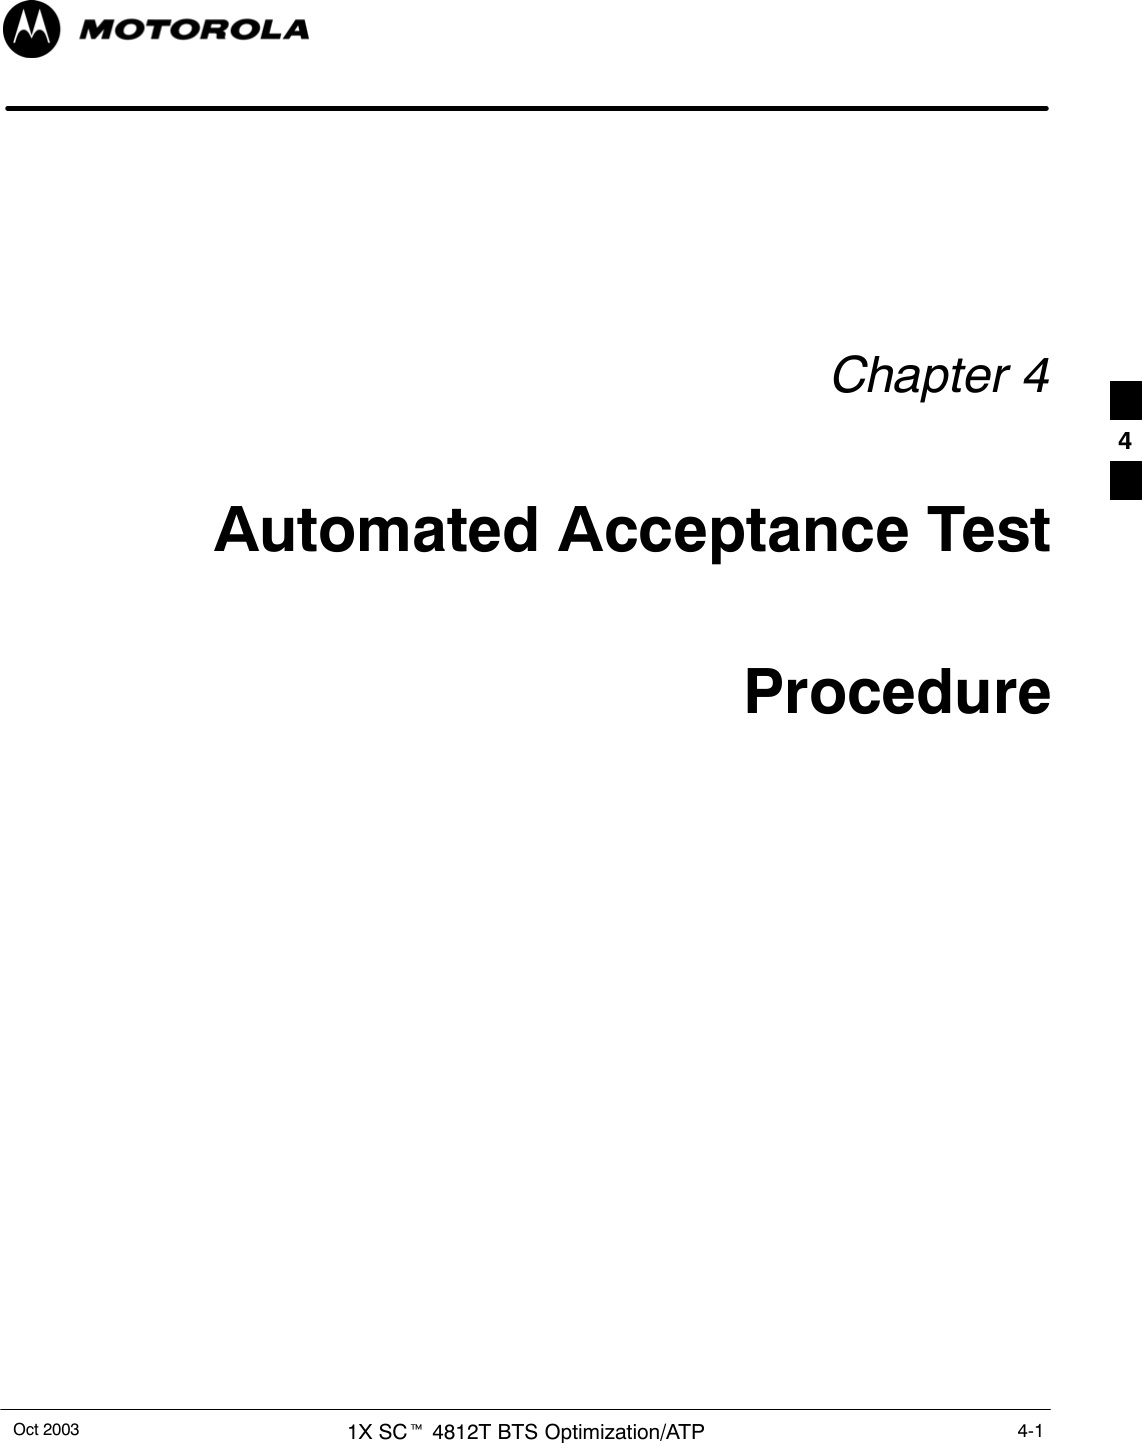 Oct 2003 1X SCt 4812T BTS Optimization/ATP 4-1Chapter 4Automated Acceptance TestProcedure4